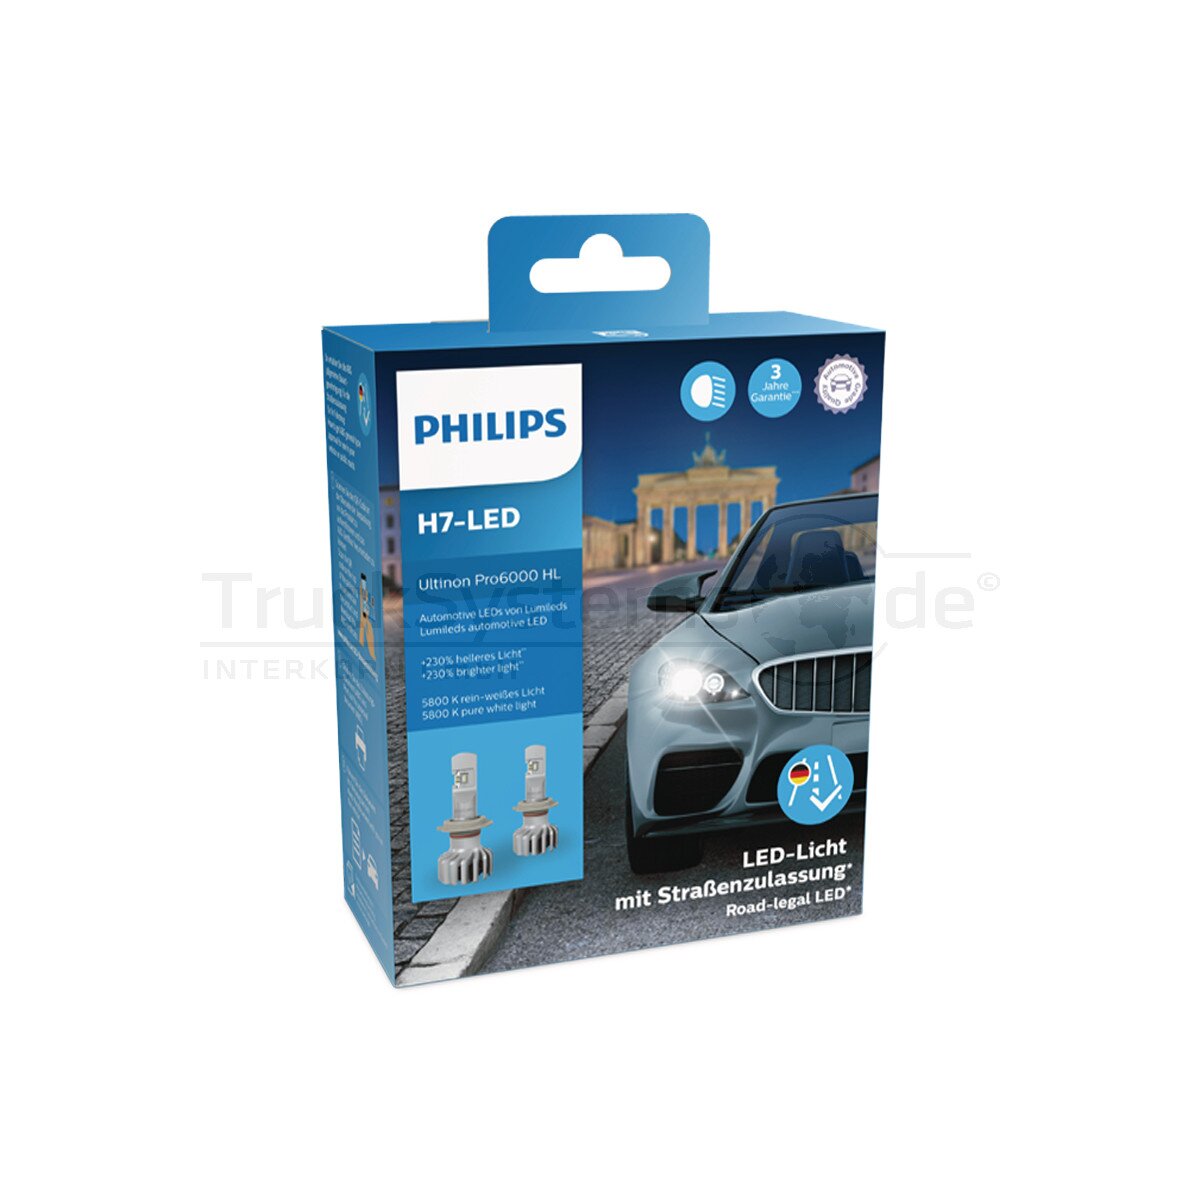 PHILIPS H7 - LED Ultinon Pro6000 HL 12 Volt - 11972U6000X2, 142,49 €